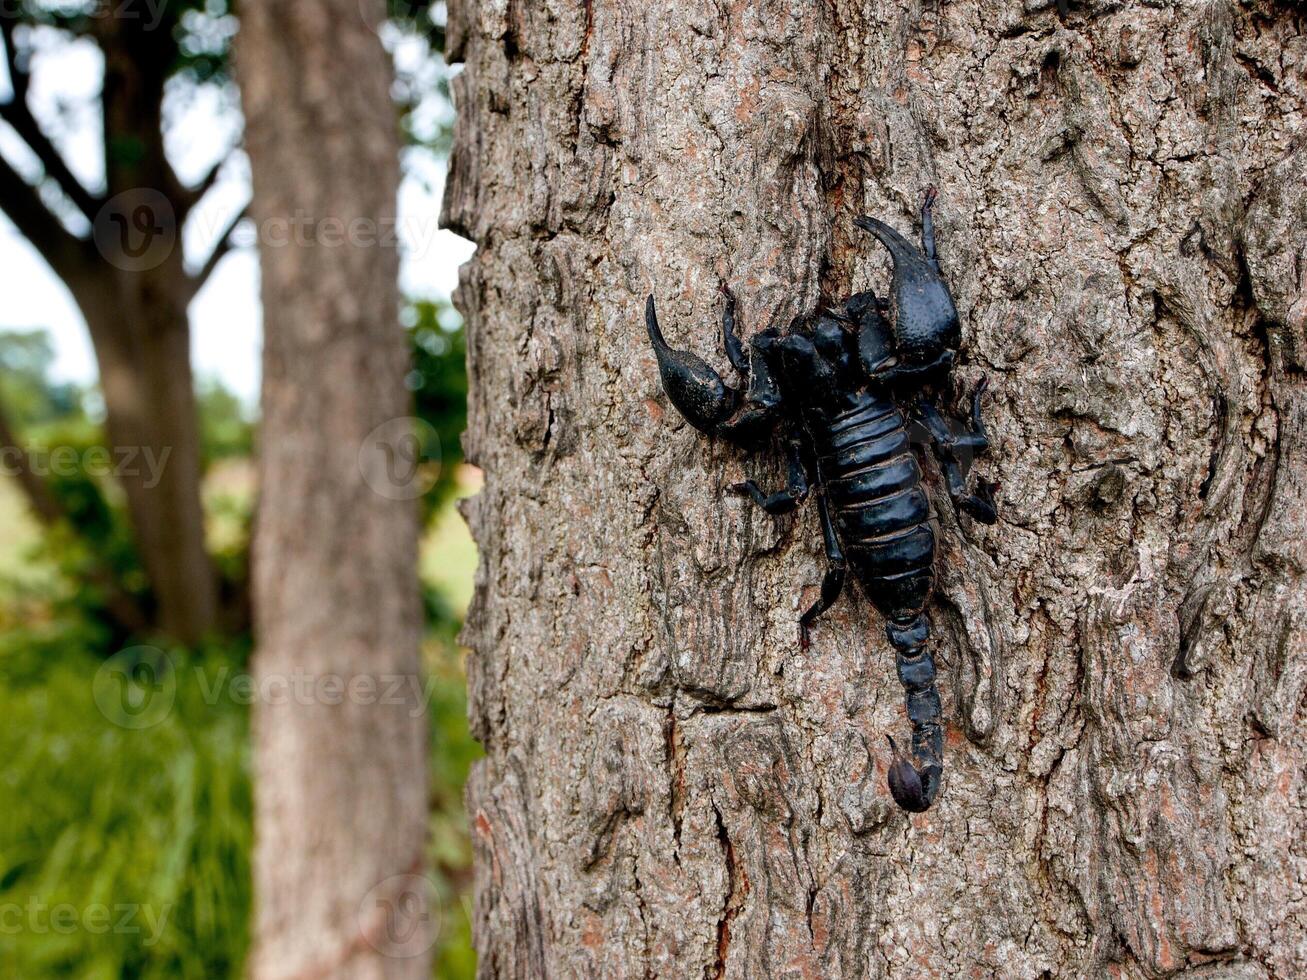 The black scorpions. photo